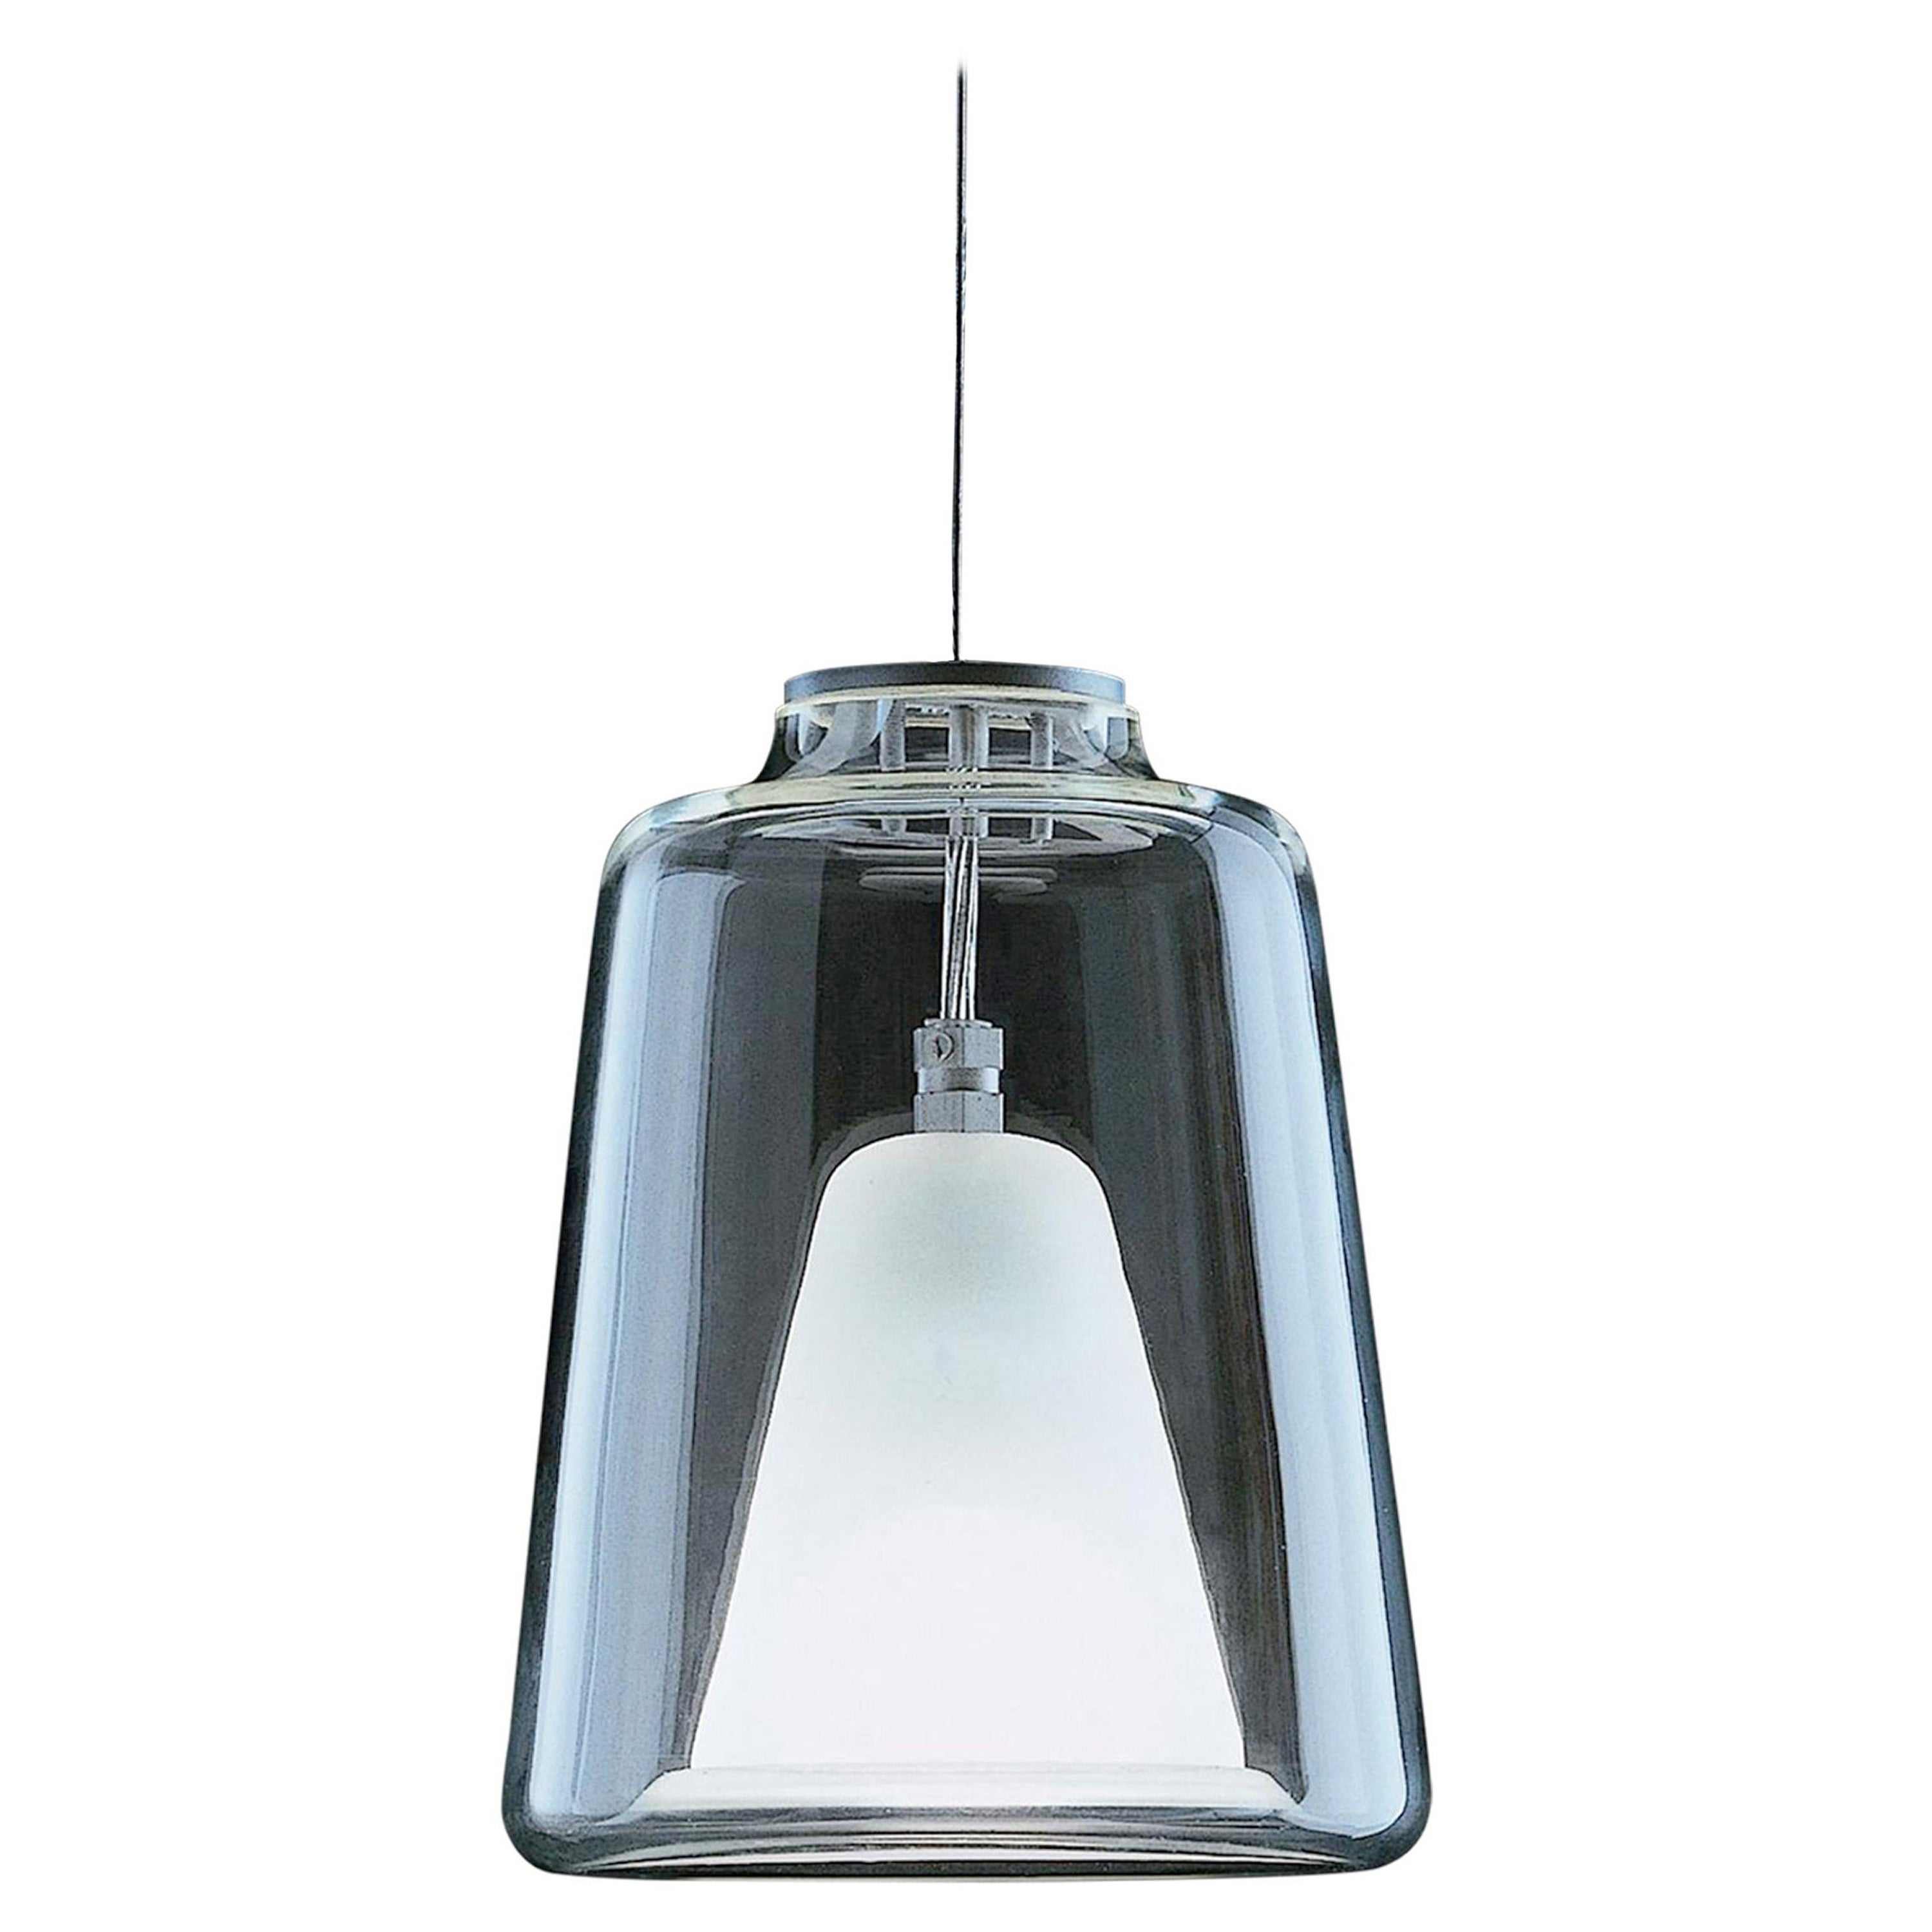 Marta Laudani & Marco Romanelli Suspension Lamp 'Lanterna' by Oluce For Sale